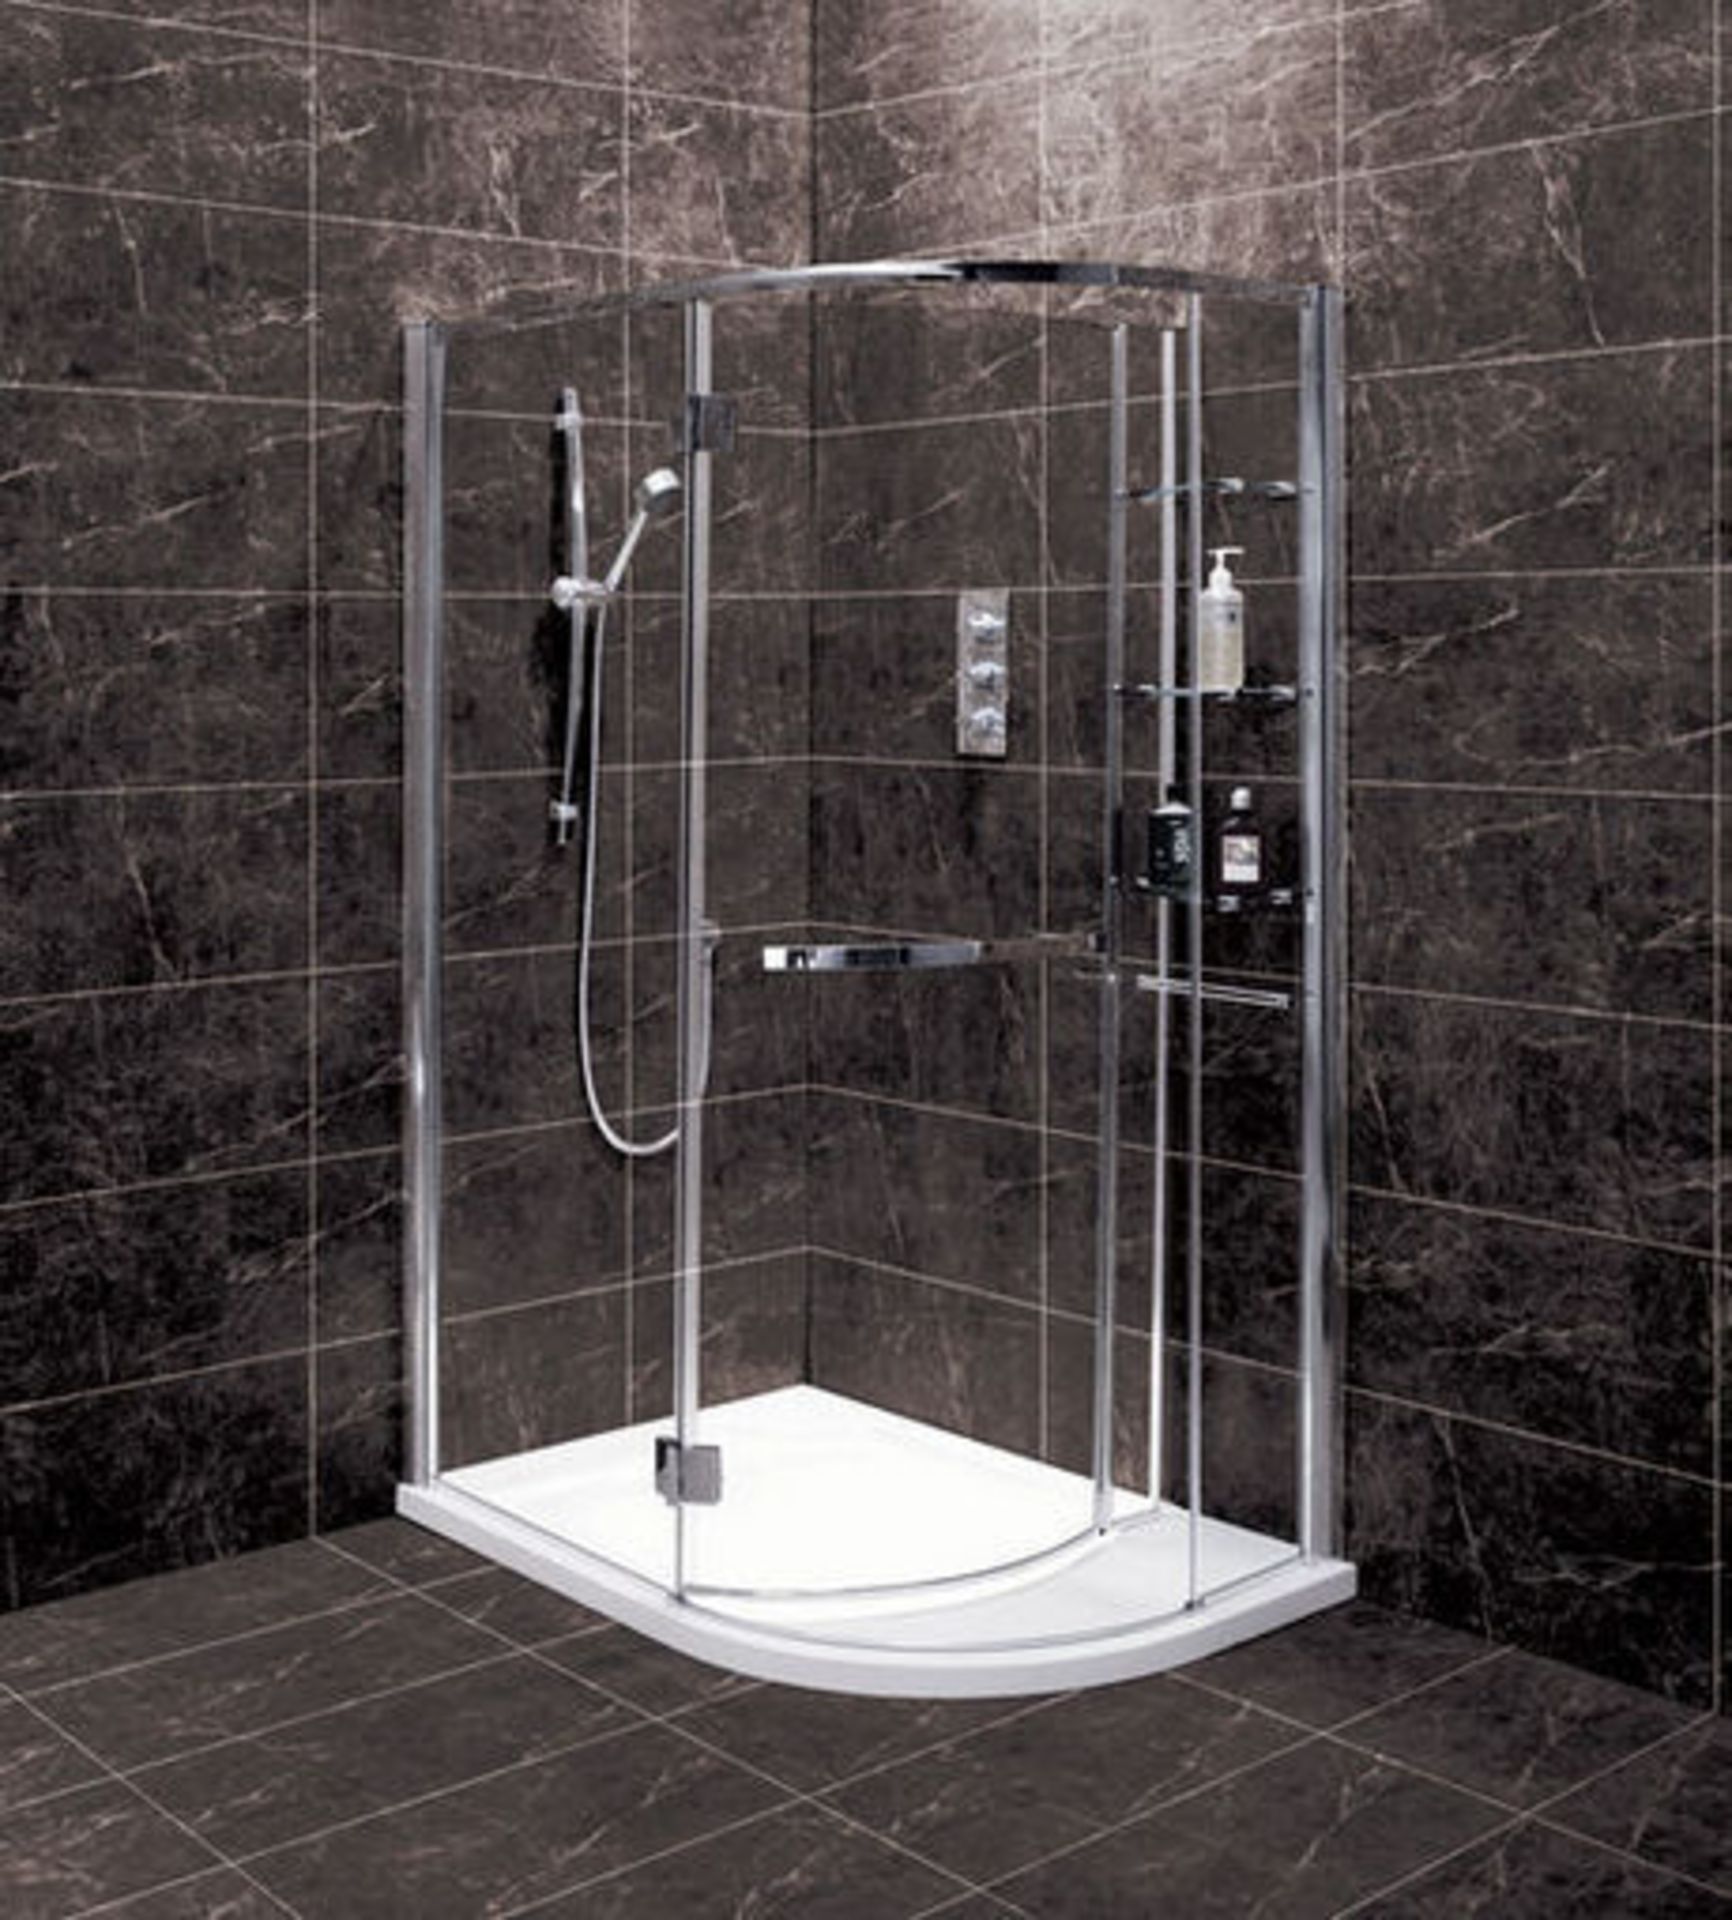 1 x Vogue Tetris Aqua Lotus Left Hand Shower Enclosure With Slimstone Stone Resin Low Profile Shower - Image 8 of 8